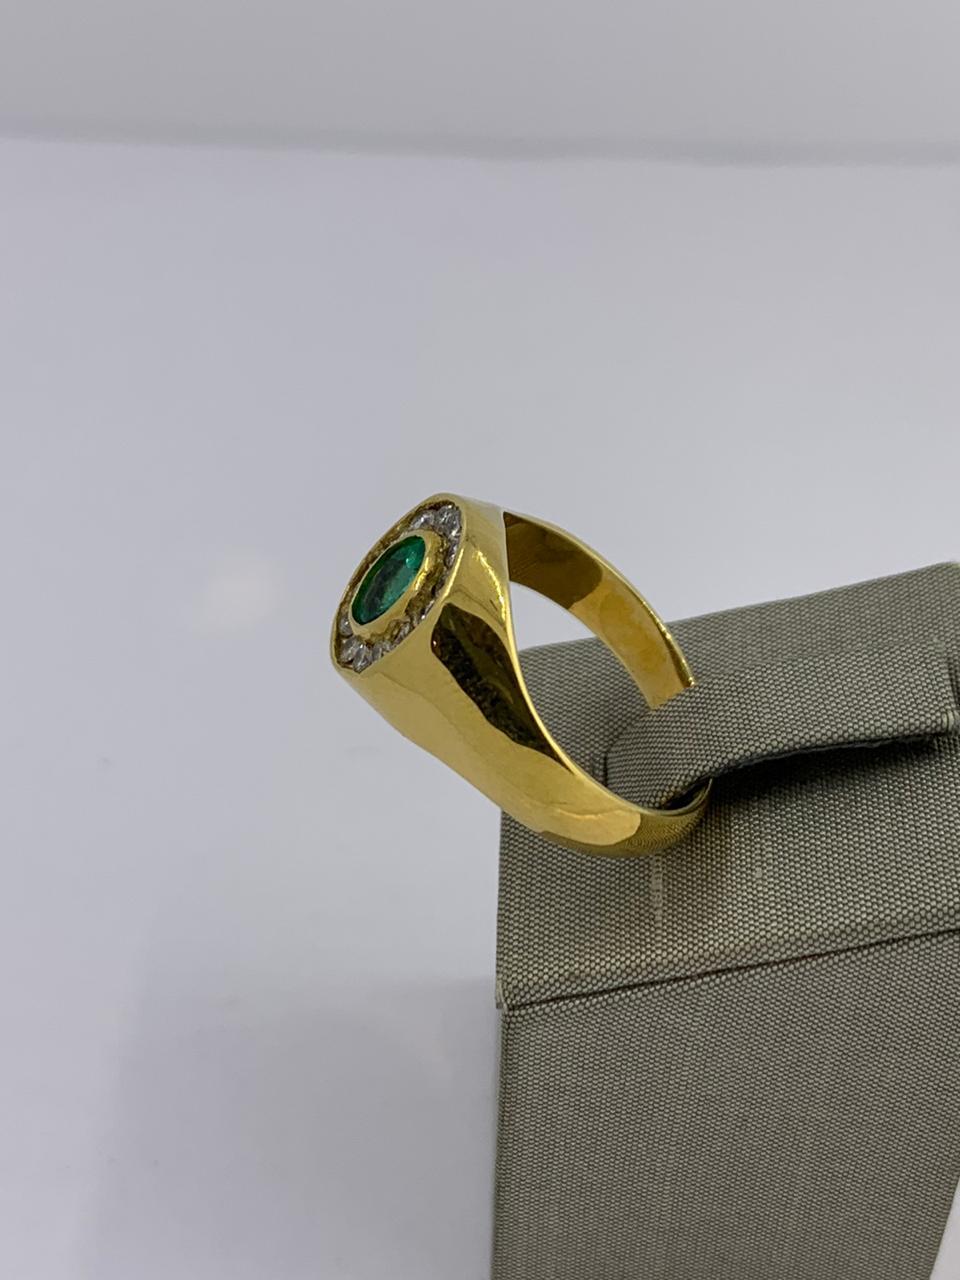 Emerald and Diamond Ring
set in 18kt Yellow Gold
Emerald 0.62 ct
Diamond 0.32 ct
21-11298